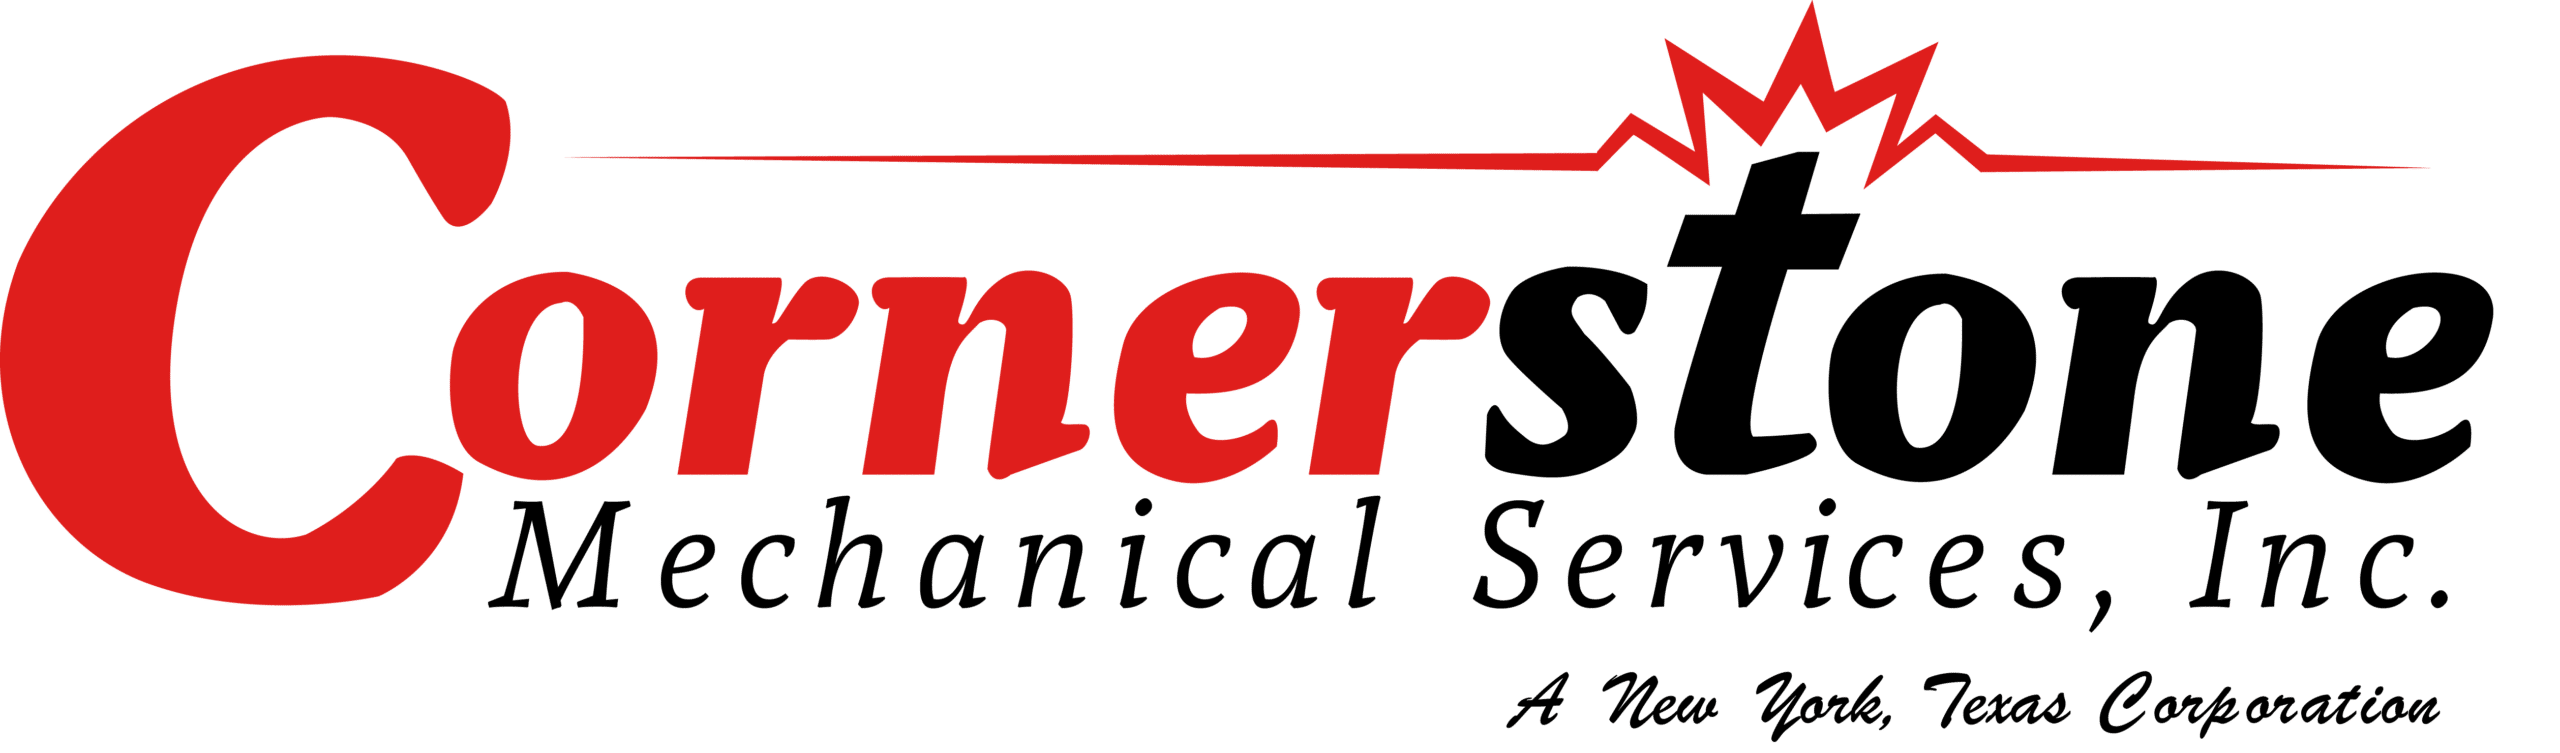 Cornerstone Mechanical Services, Inc.